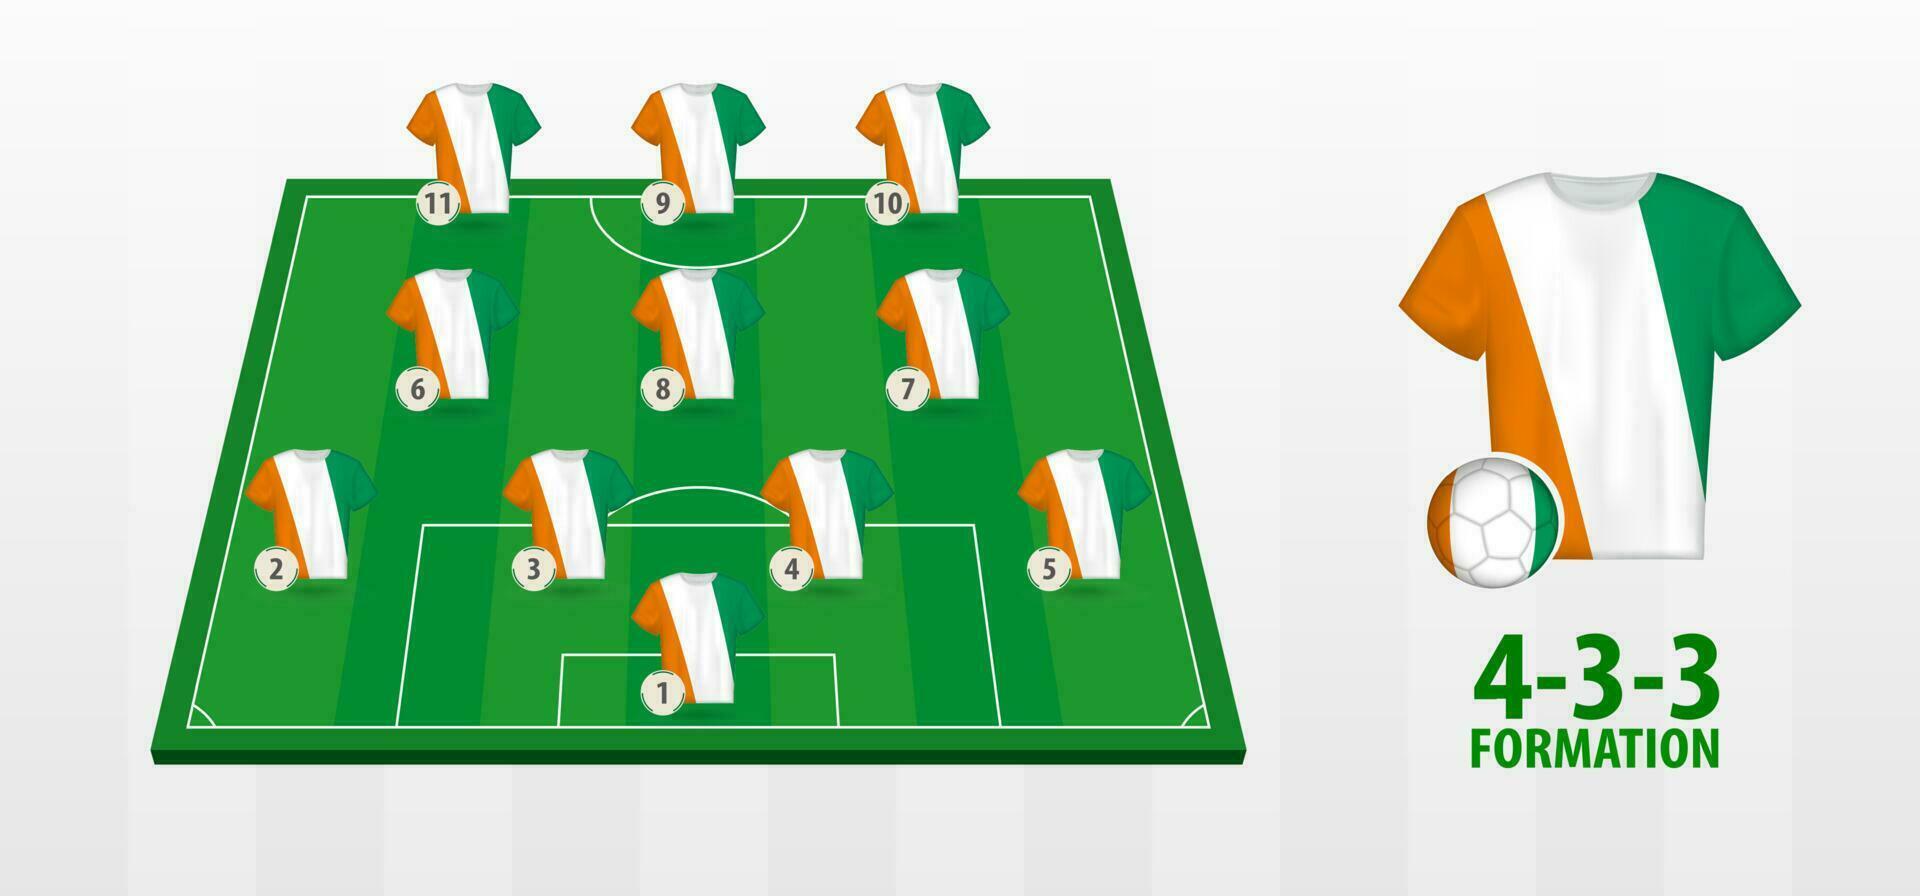 Ivory Coast National Football Team Formation on Football Field. vector